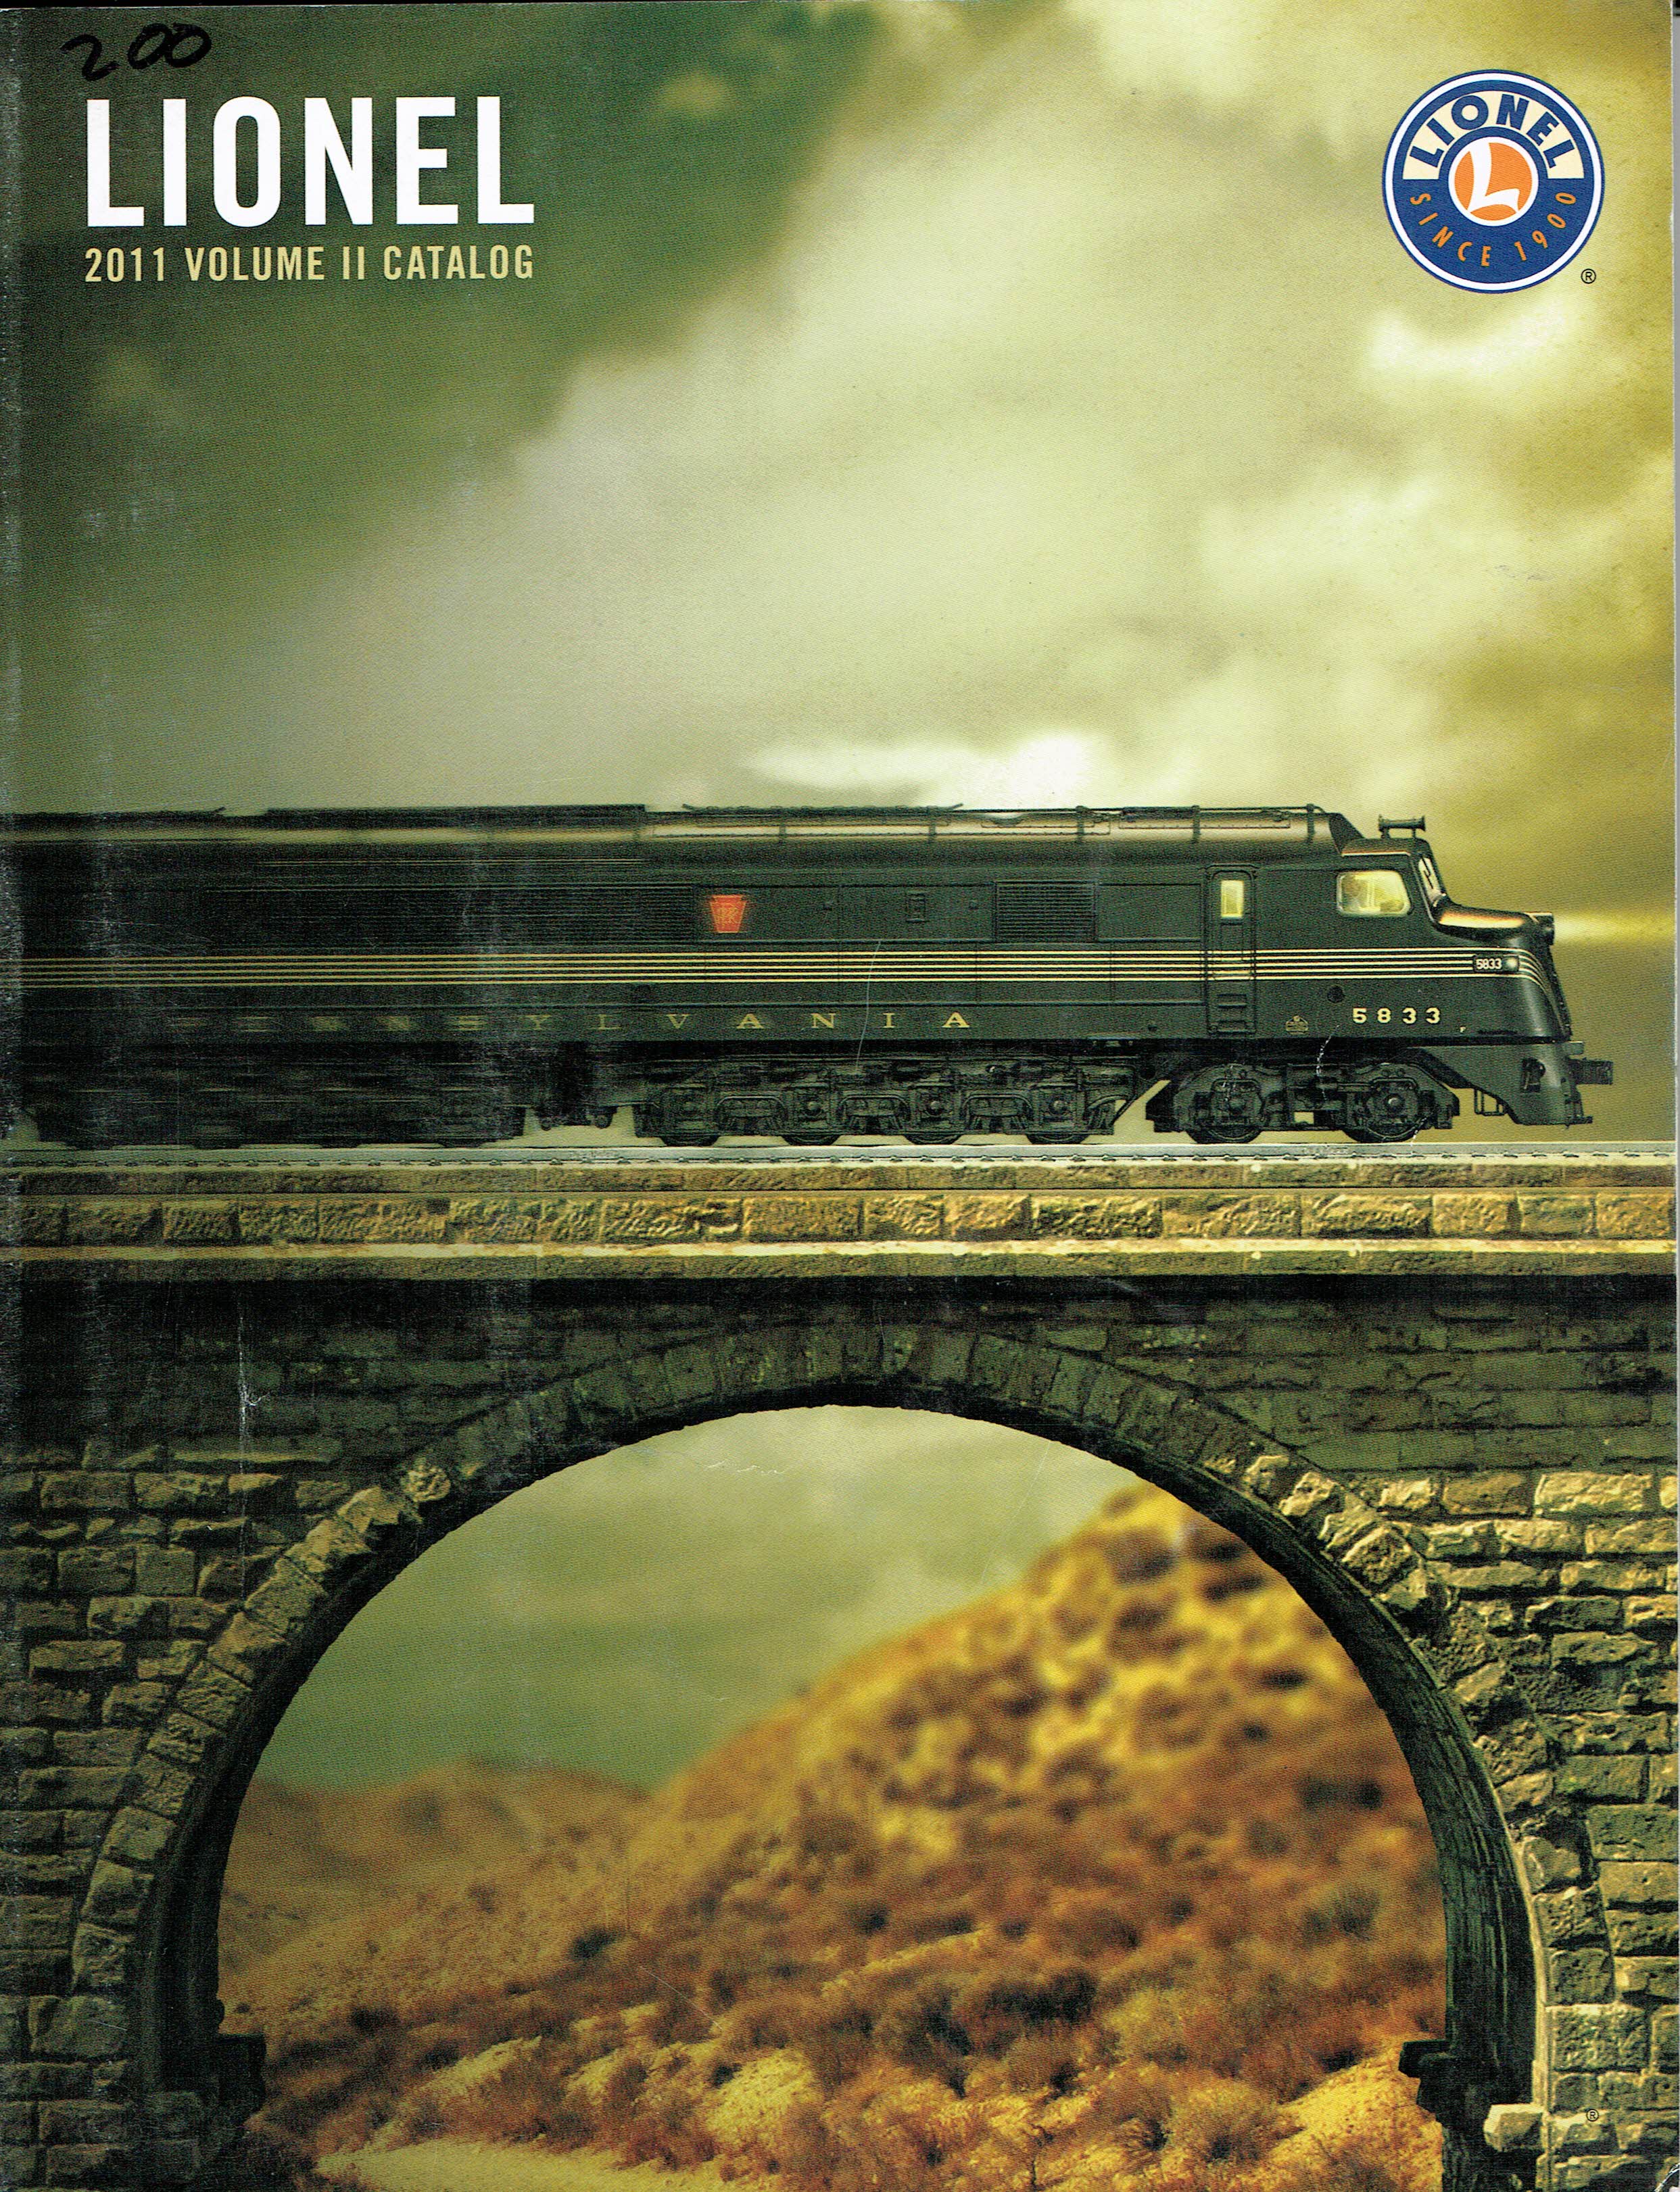 Lionel 2011 Volume II Catalog image